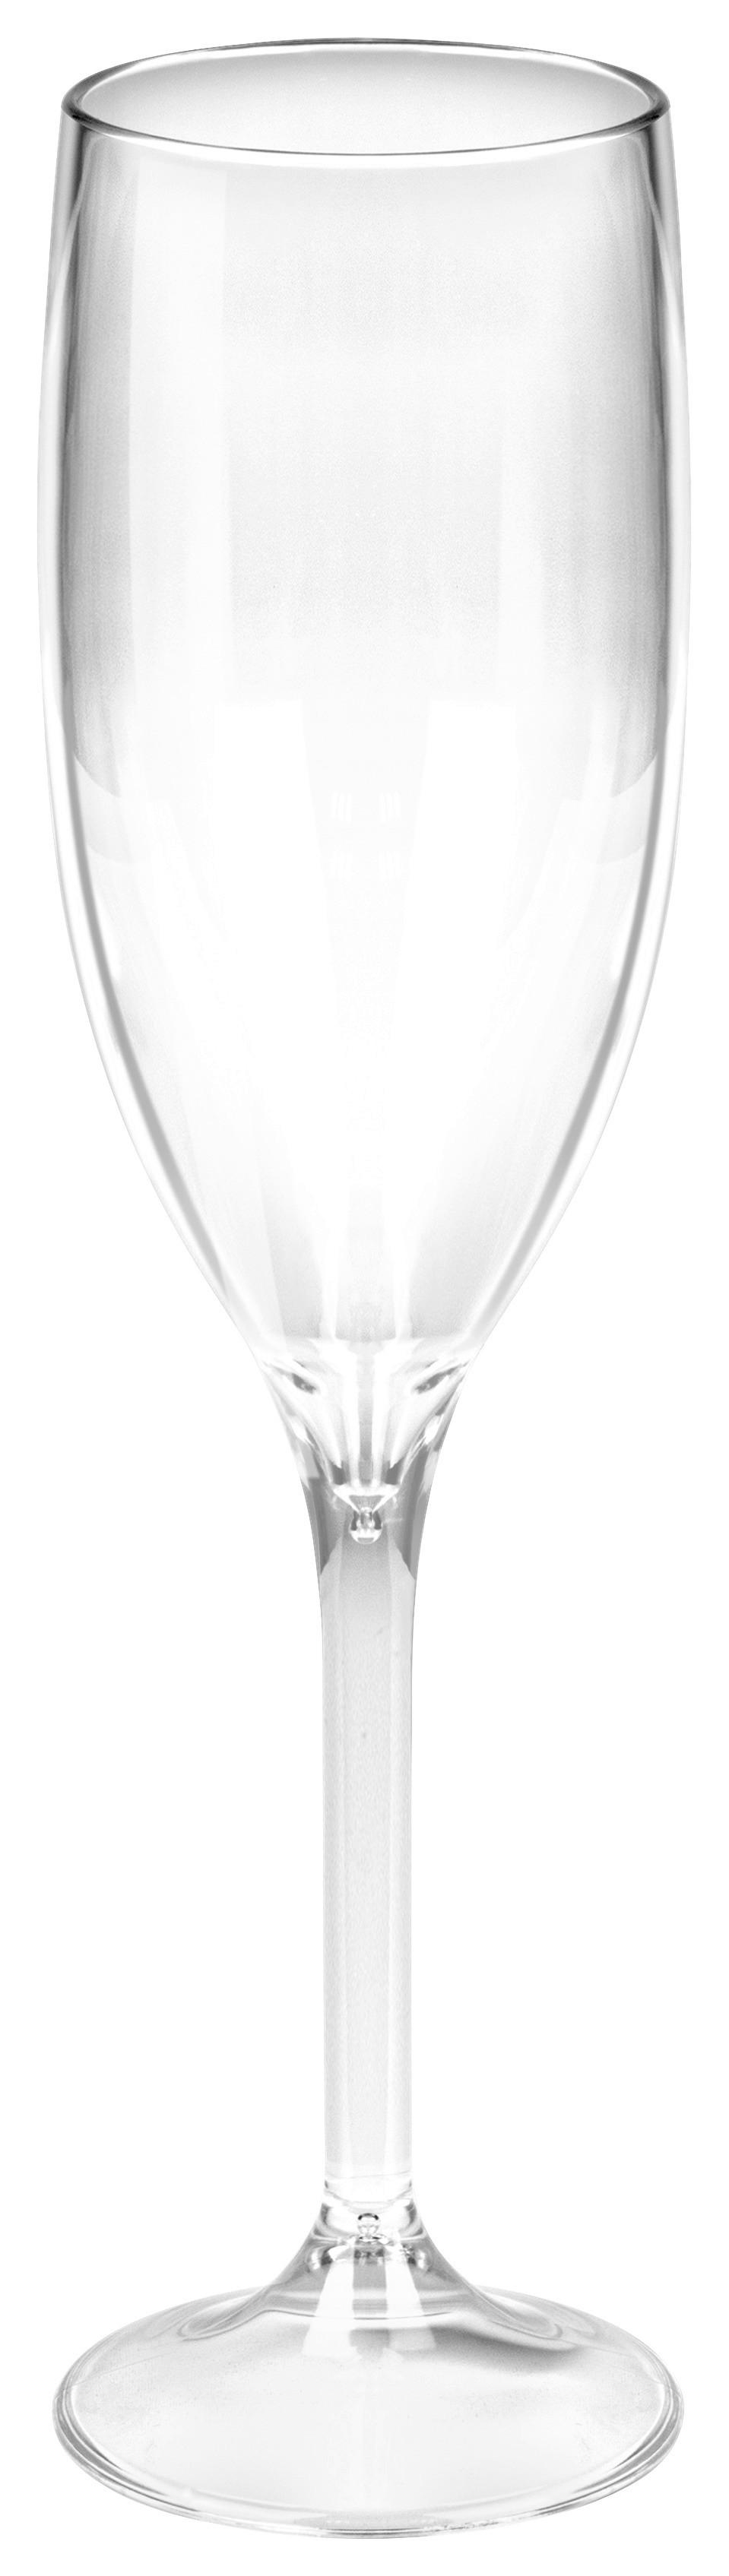 Trinkglas transparent